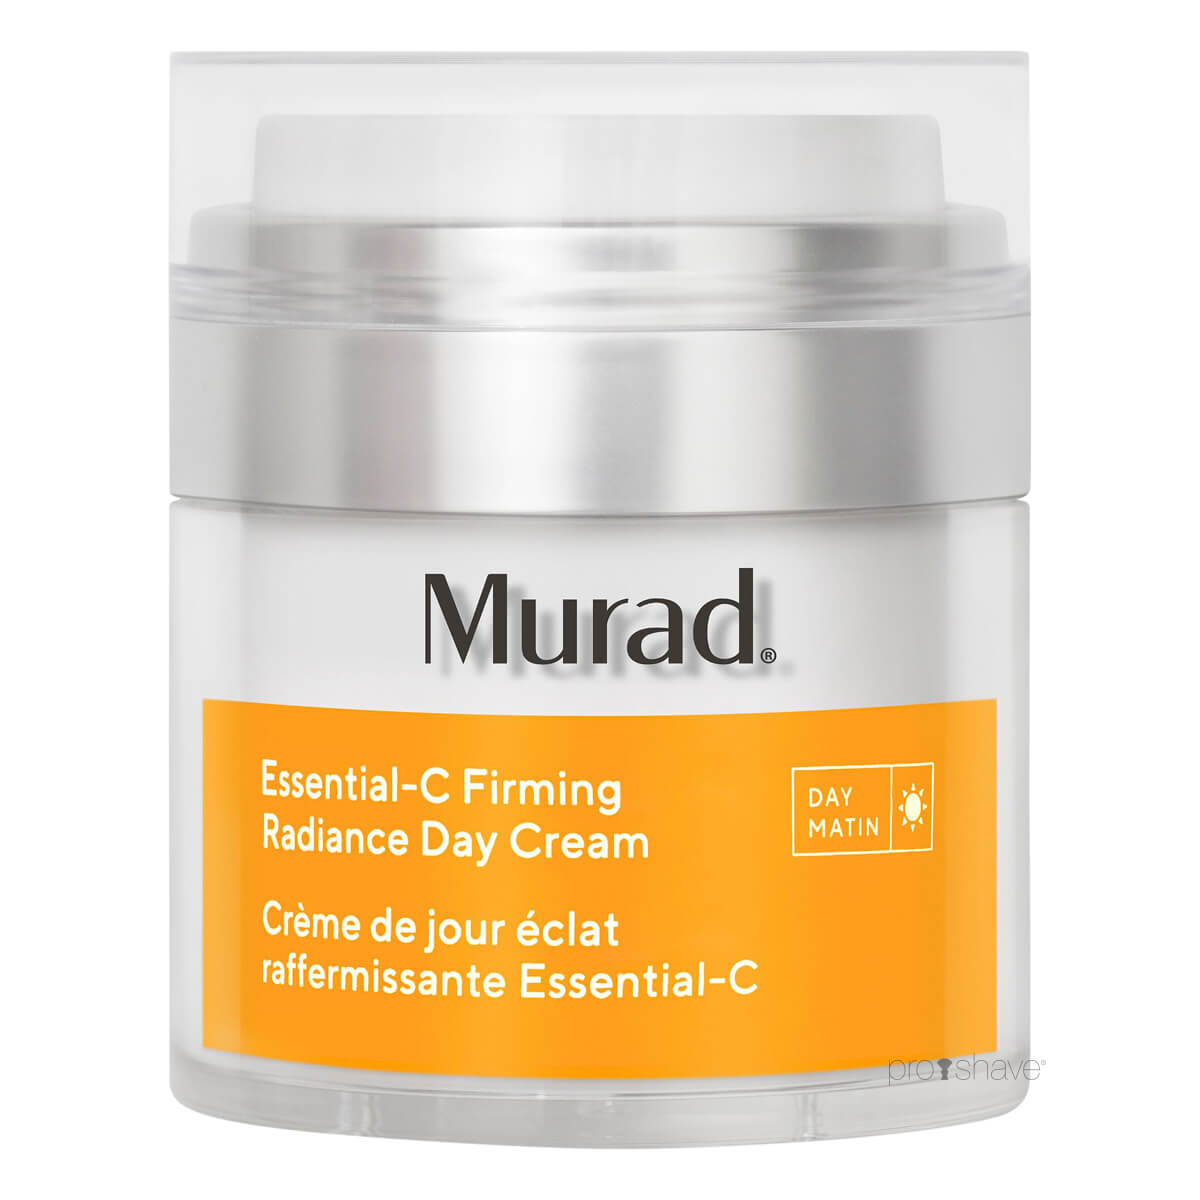 Billede af Murad Essential-C Firming Radiance Day Cream, Environmental Shield, 50 ml.